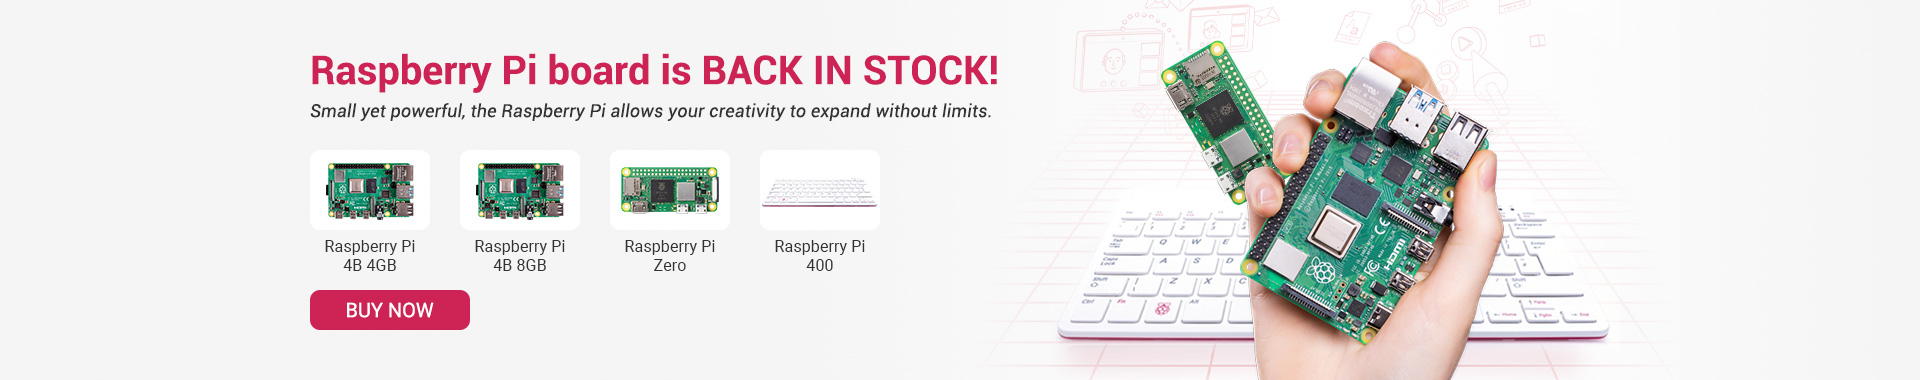 Raspberry Pi is back in stock